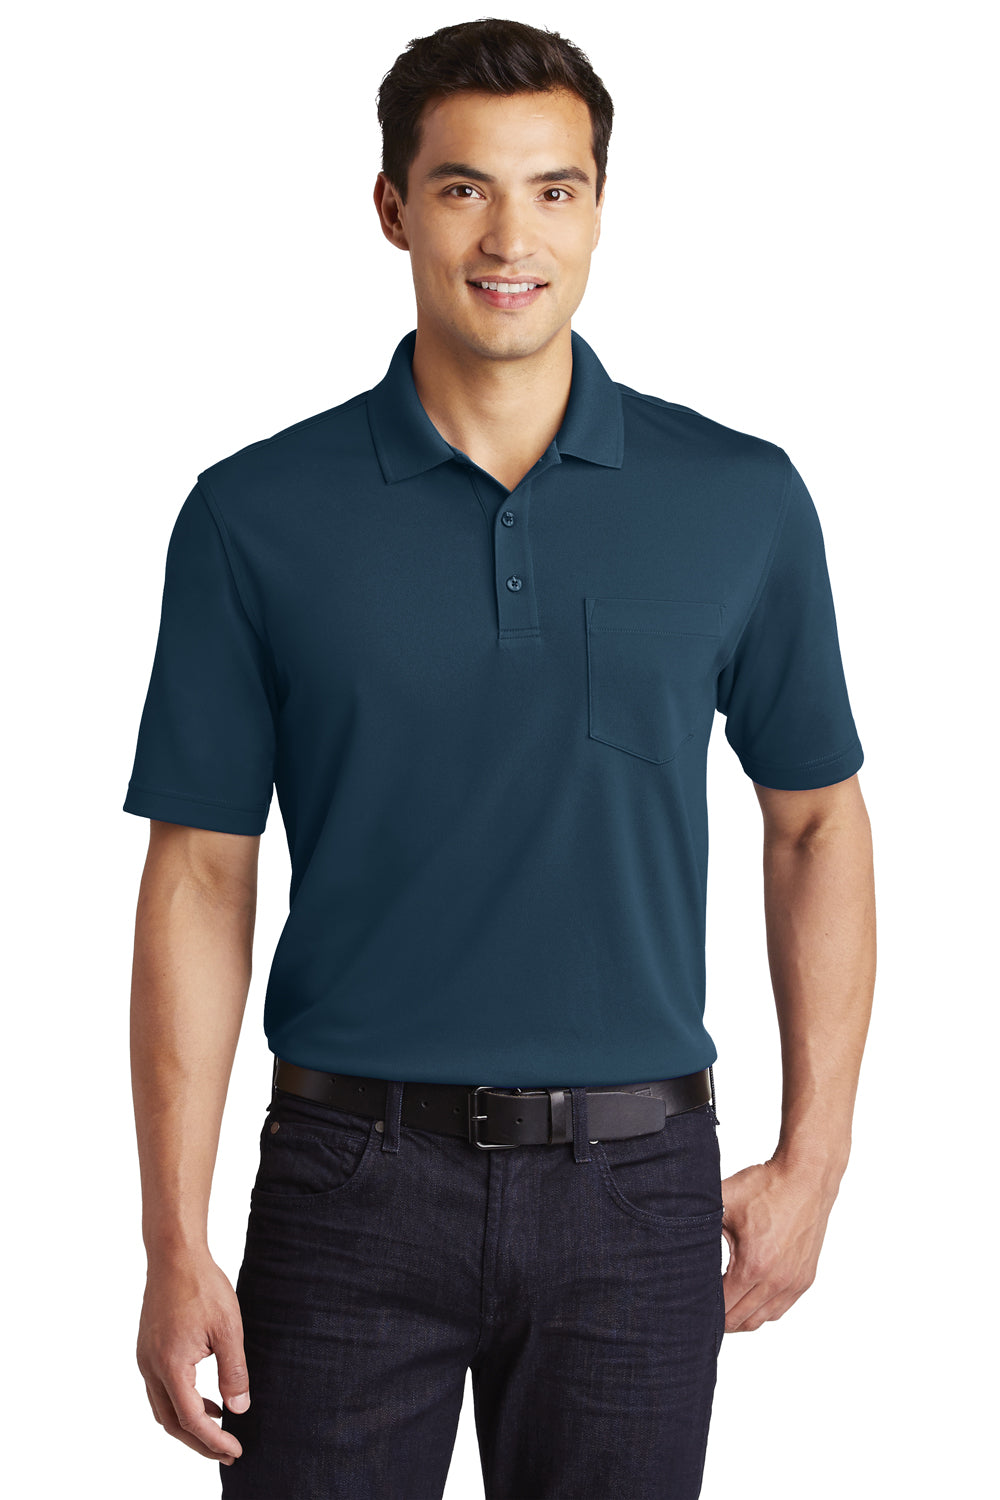 Port Authority K110P Mens Dry Zone Moisture Wicking Short Sleeve Polo Shirt w/ Pocket Navy Blue Front